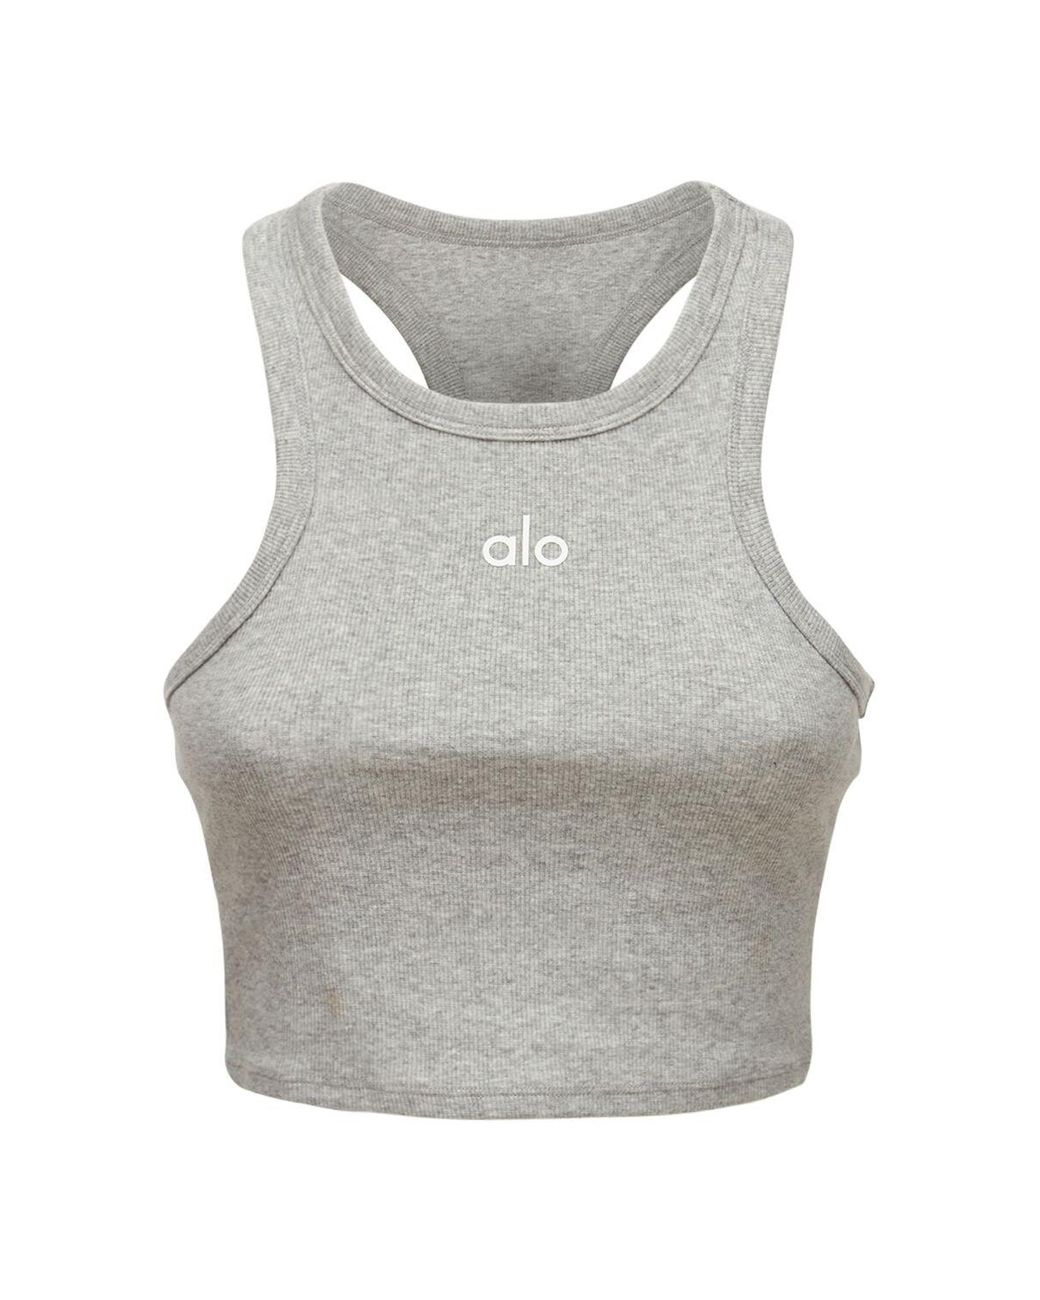 Alo Yoga Aspire Tank Top in Gray